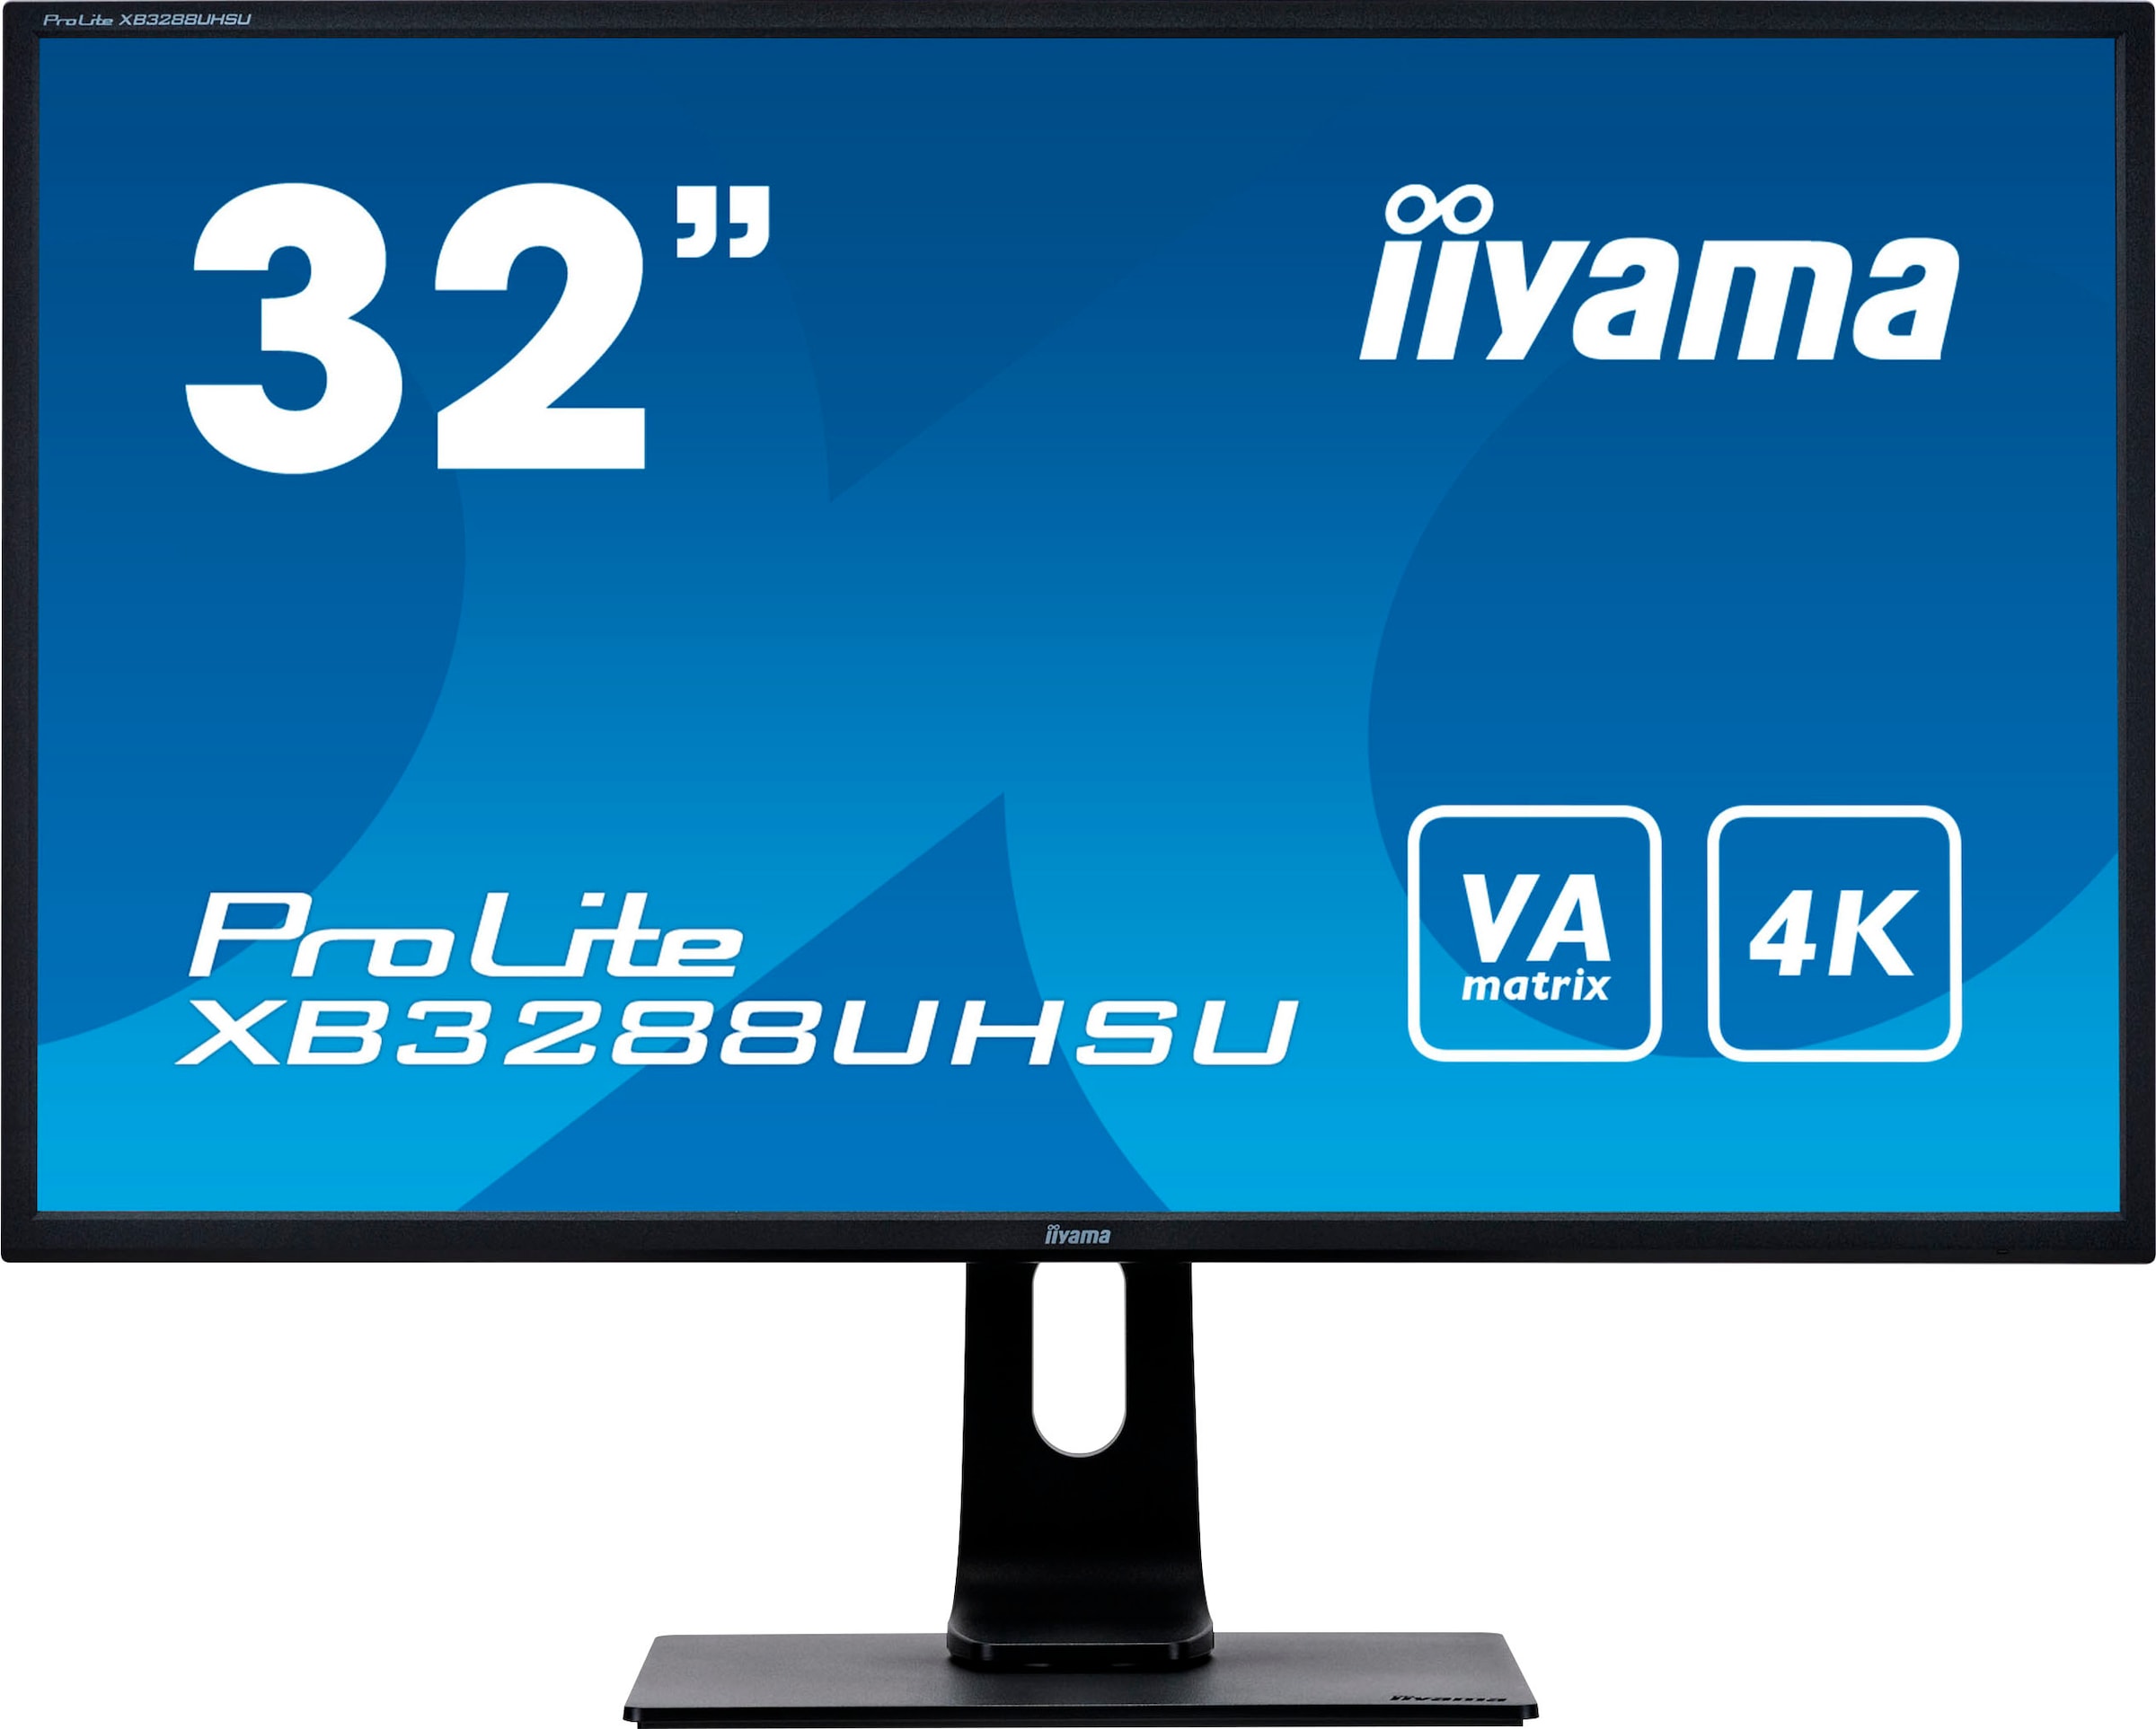 Iiyama Gaming-Monitor »Polite XB3288UHSU-B1«, 81,3 cm/31,5 Zoll, 3840 x 2160 px, 4K Ultra HD, 3 ms Reaktionszeit, 60 Hz